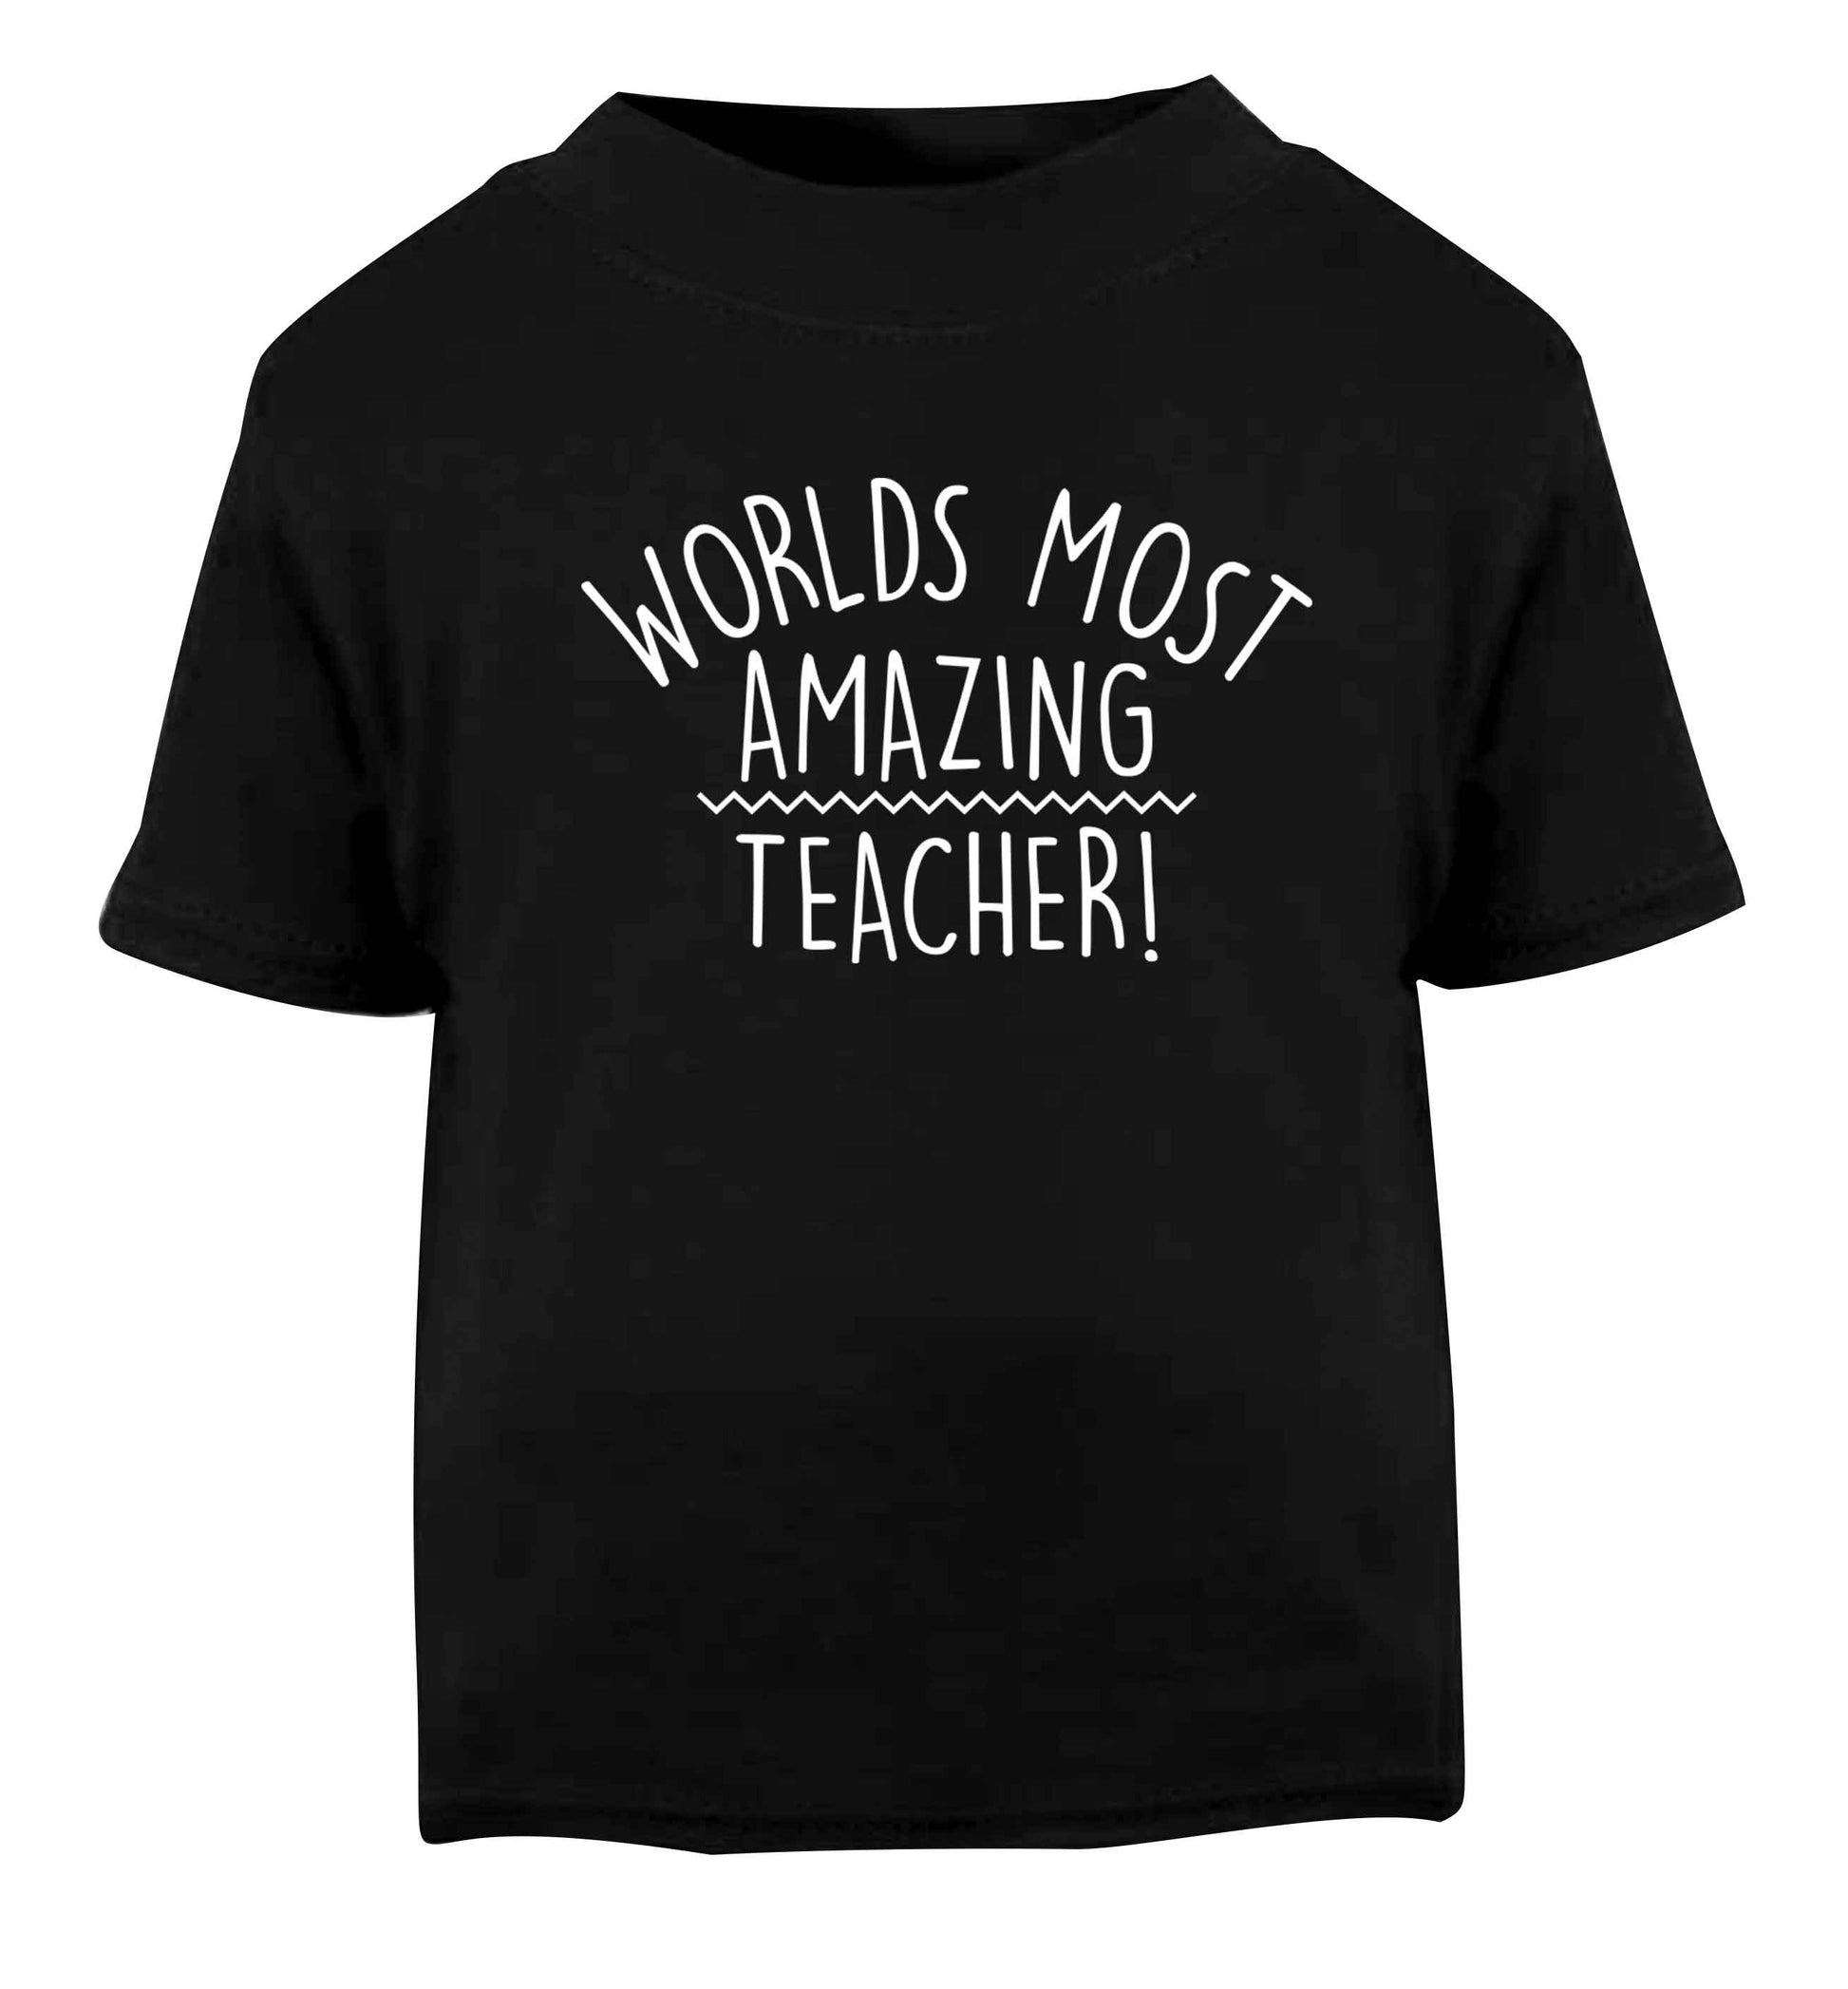 Worlds most amazing teacher Black baby toddler Tshirt 2 years